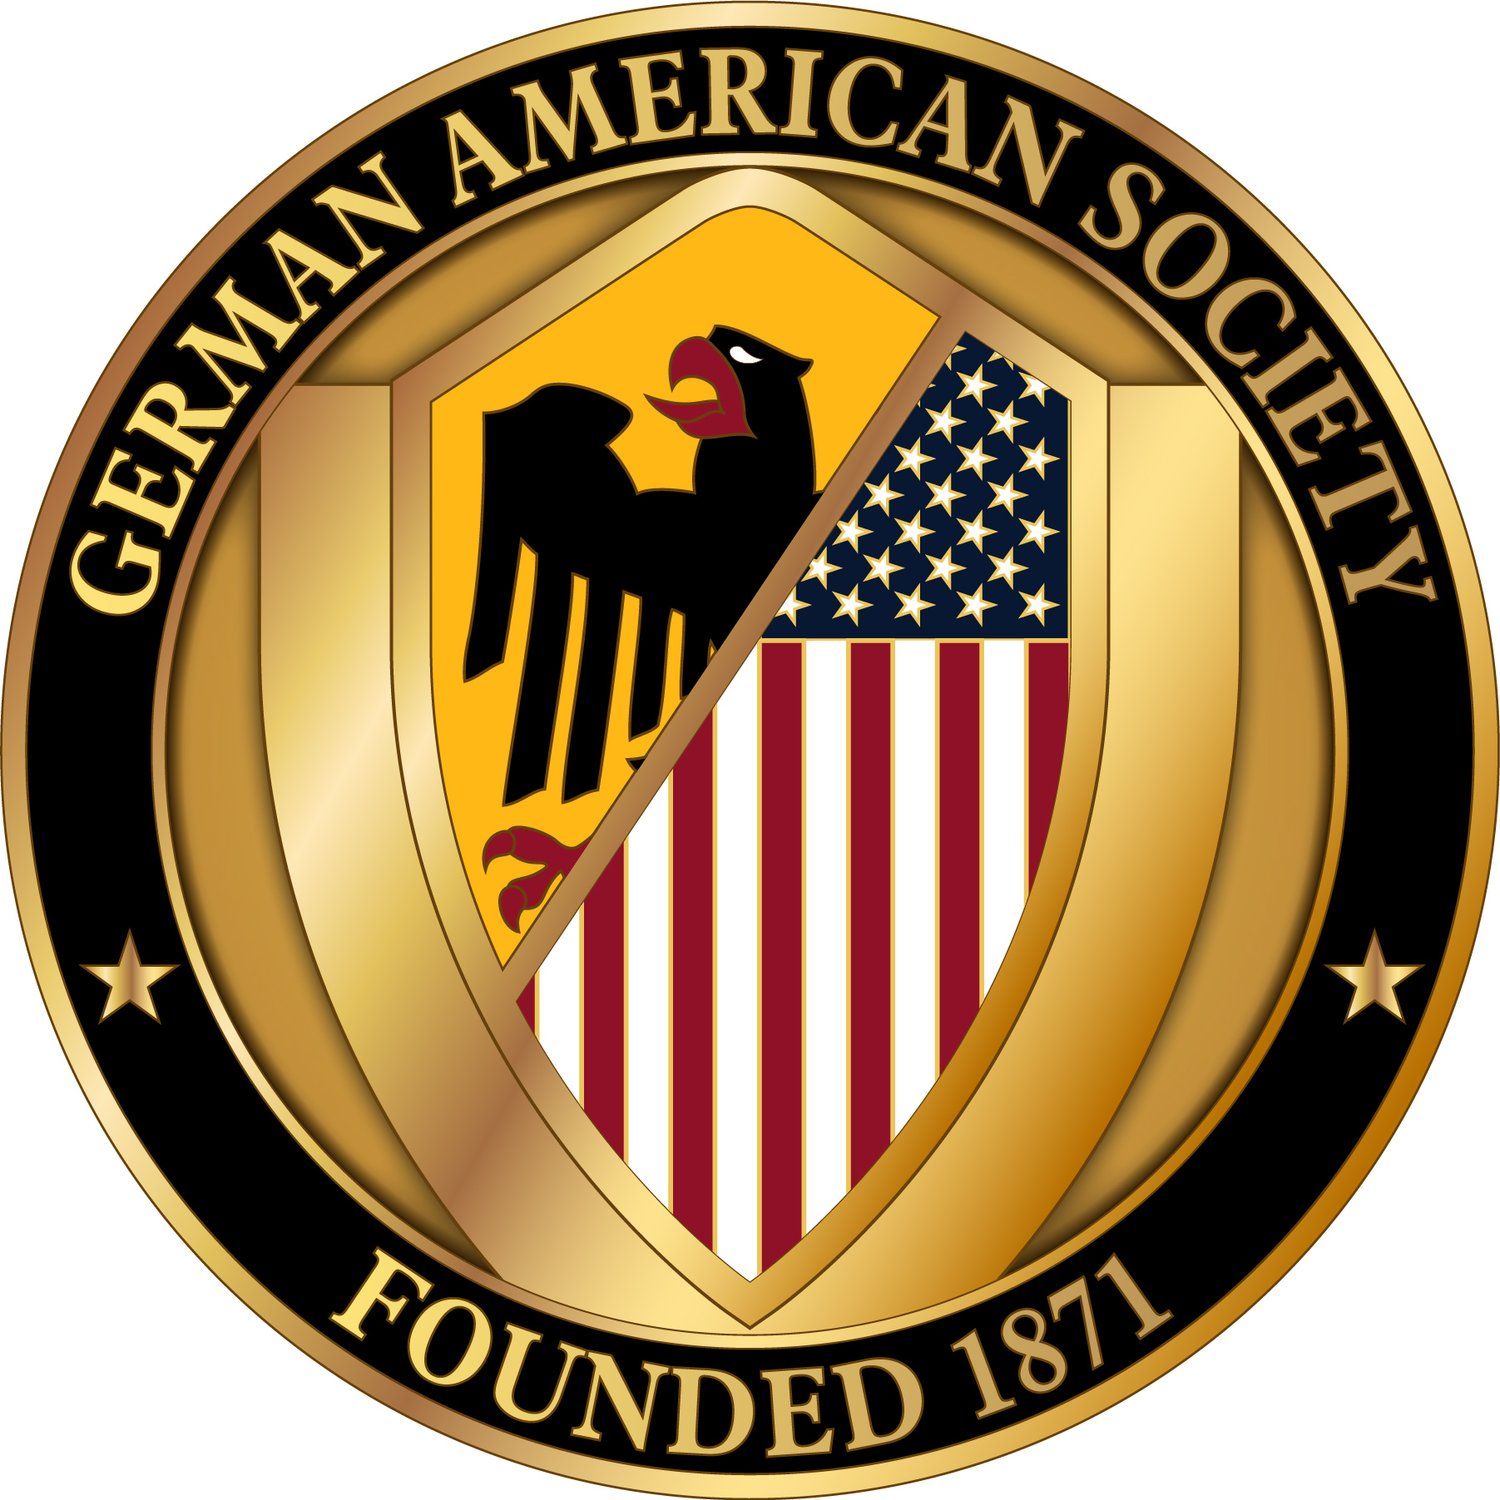 German Non Profit Organizations in USA - German American Society of Portland